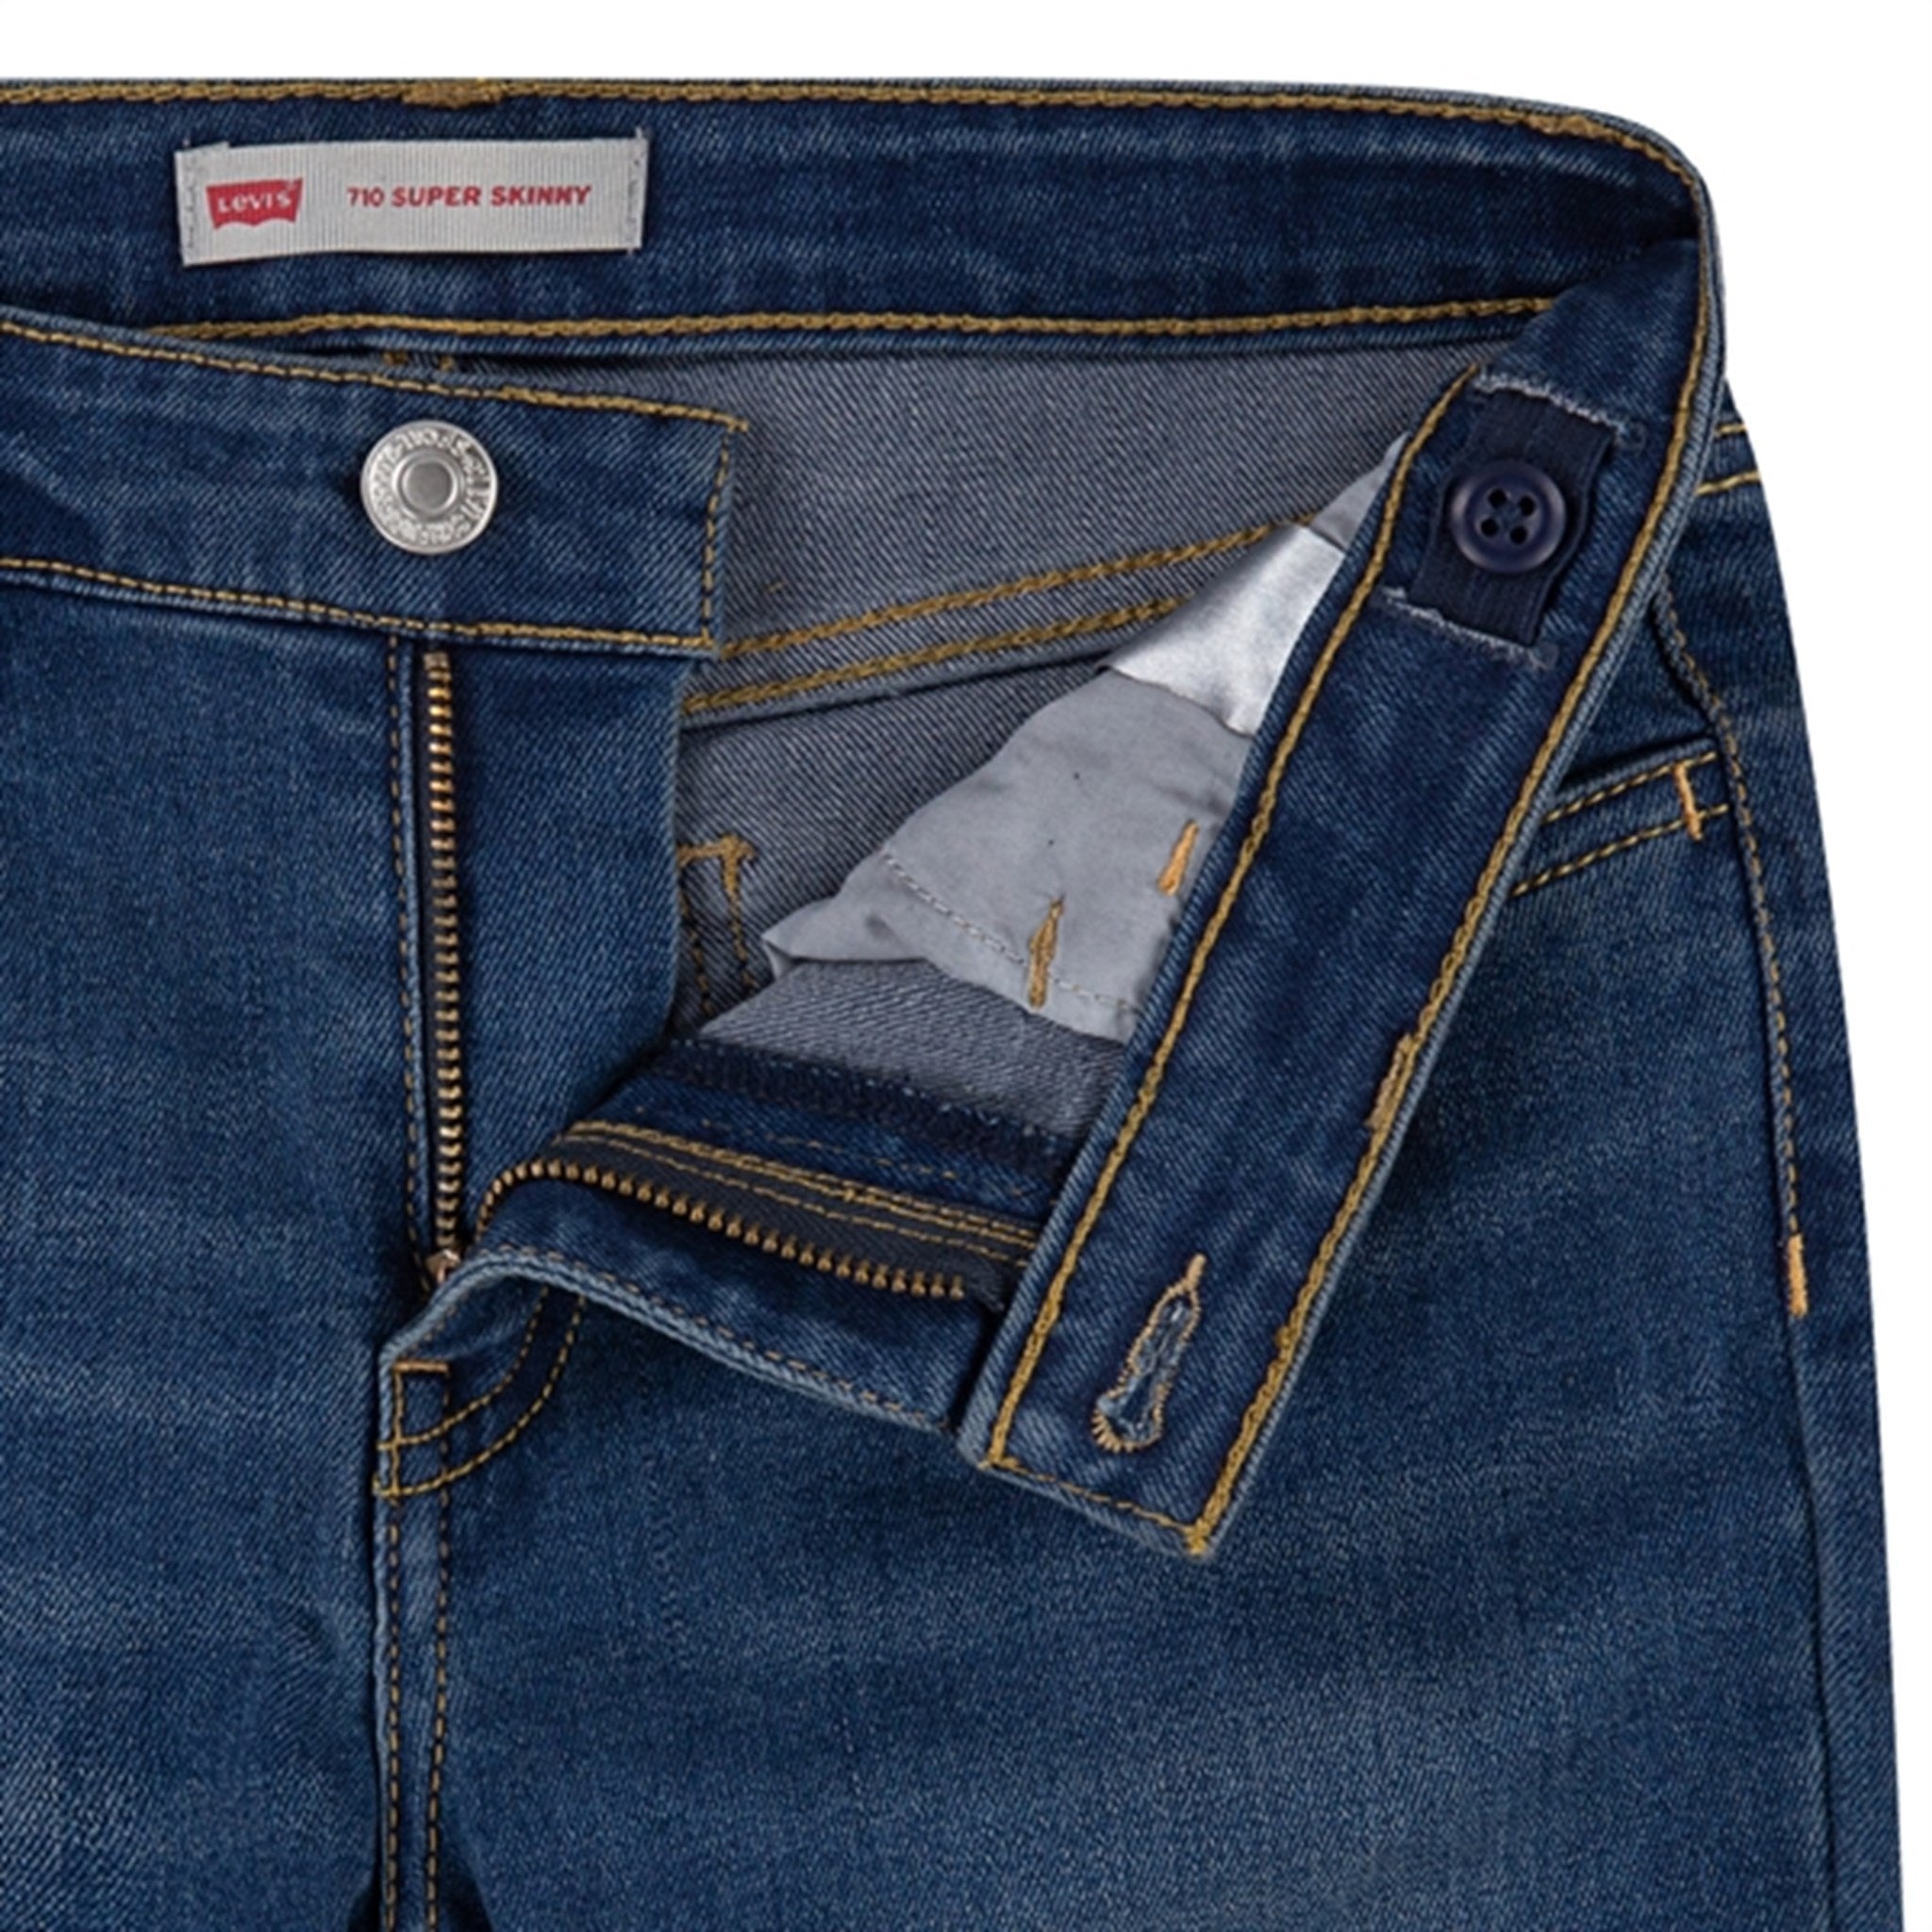 Levi's 710 Super Skinny Jeans Maniac Monday 3